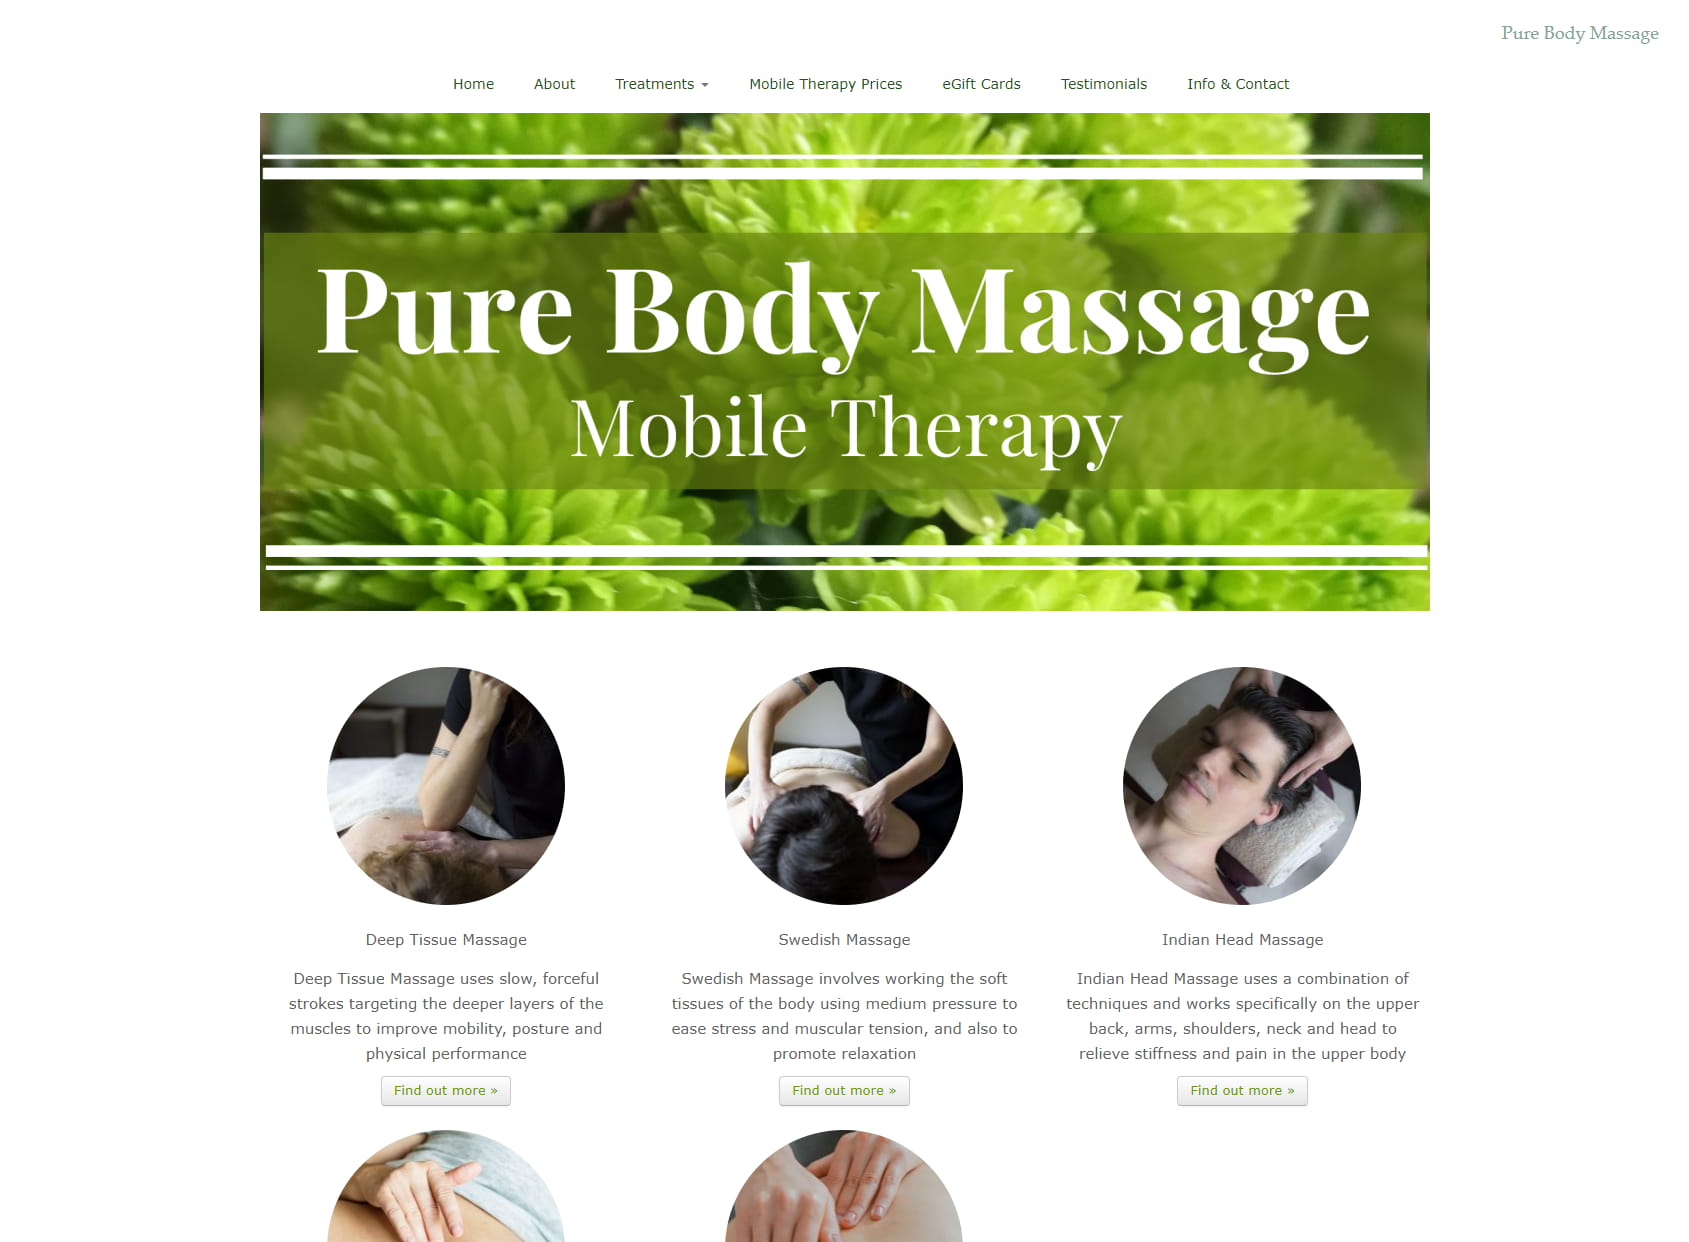 Pure Body Massage - Mobile Therapy